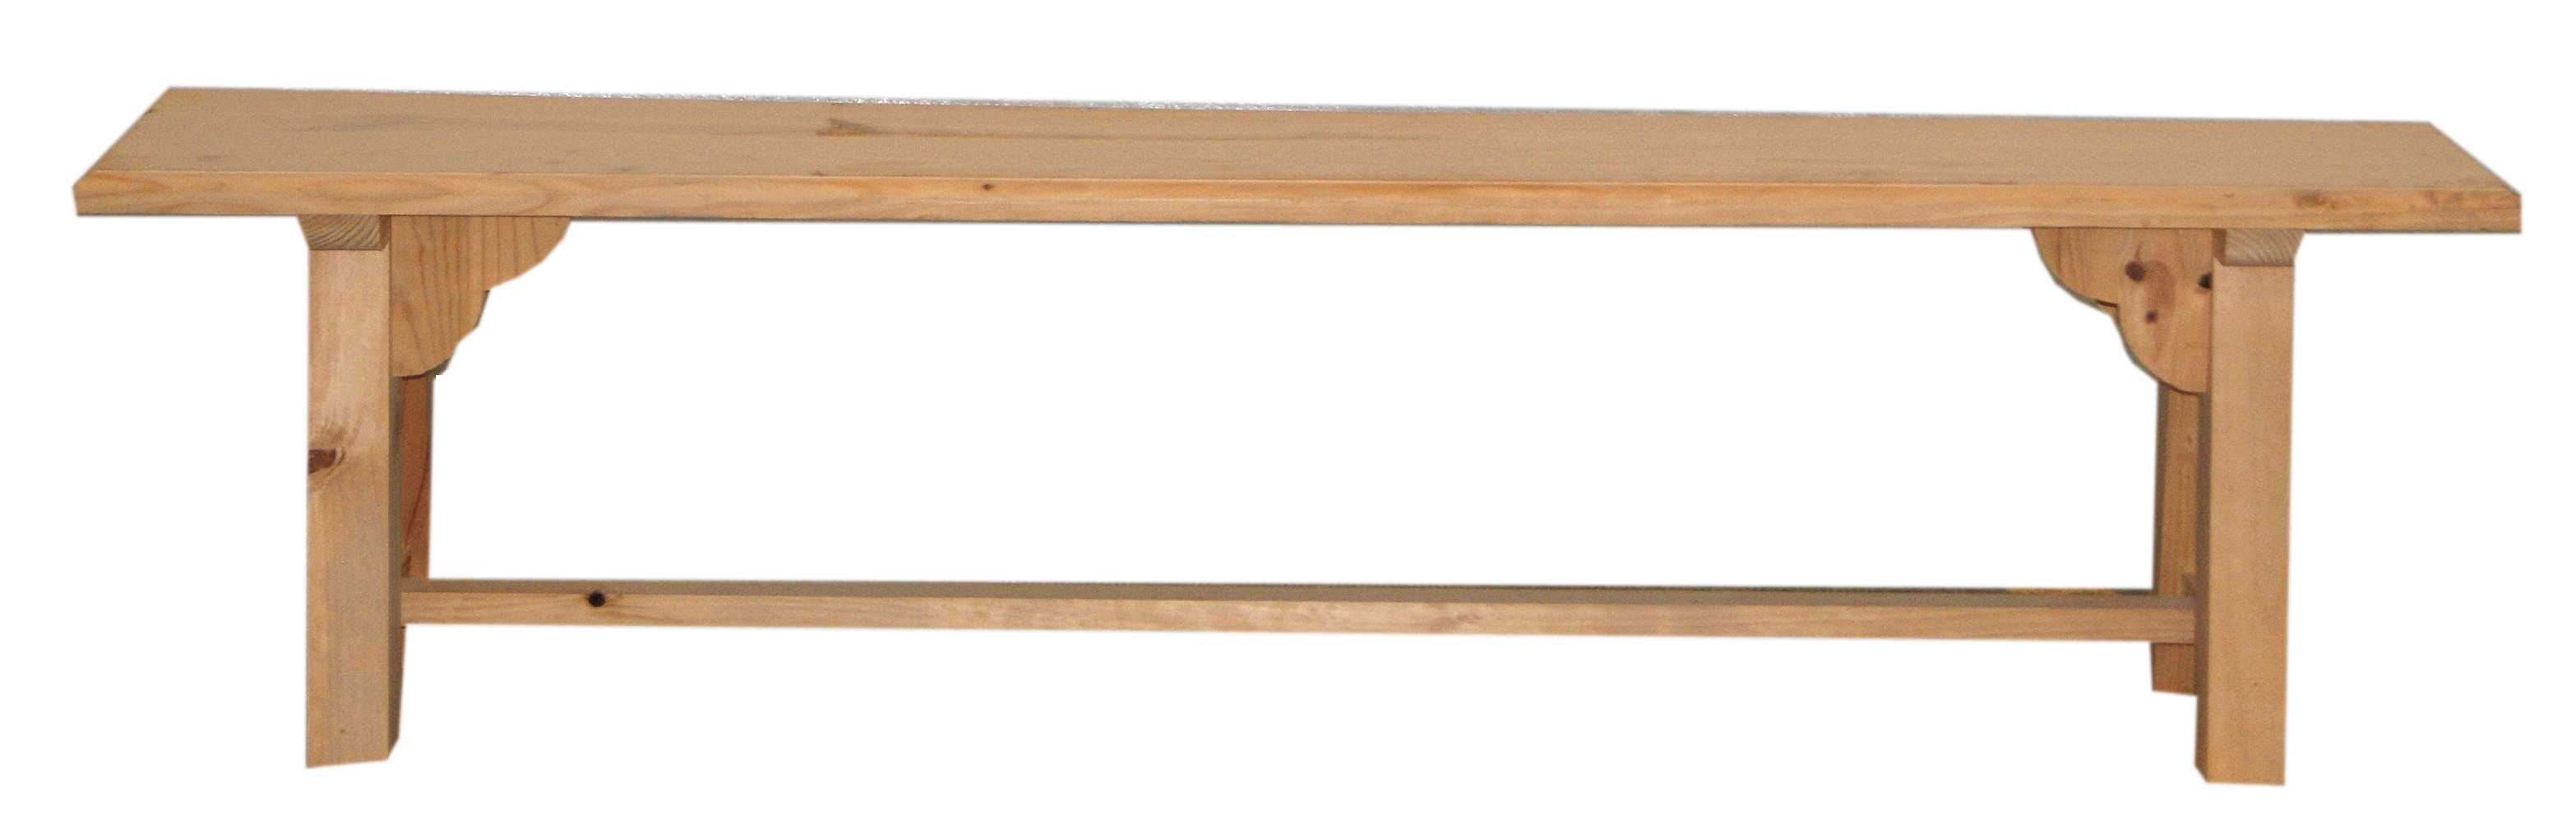 banco de madera rústica